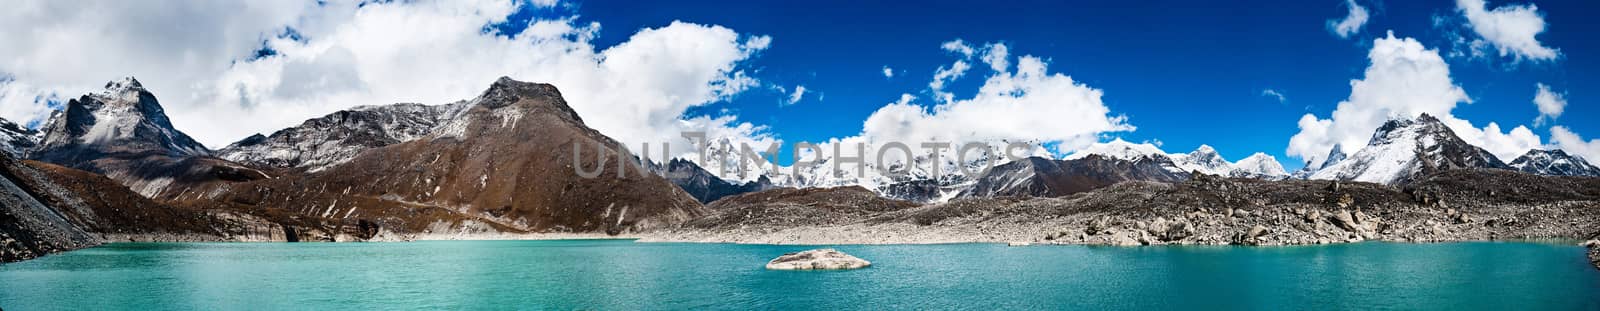 Himalaya panorama: sacred lake near Gokyo and Everest summit by Arsgera